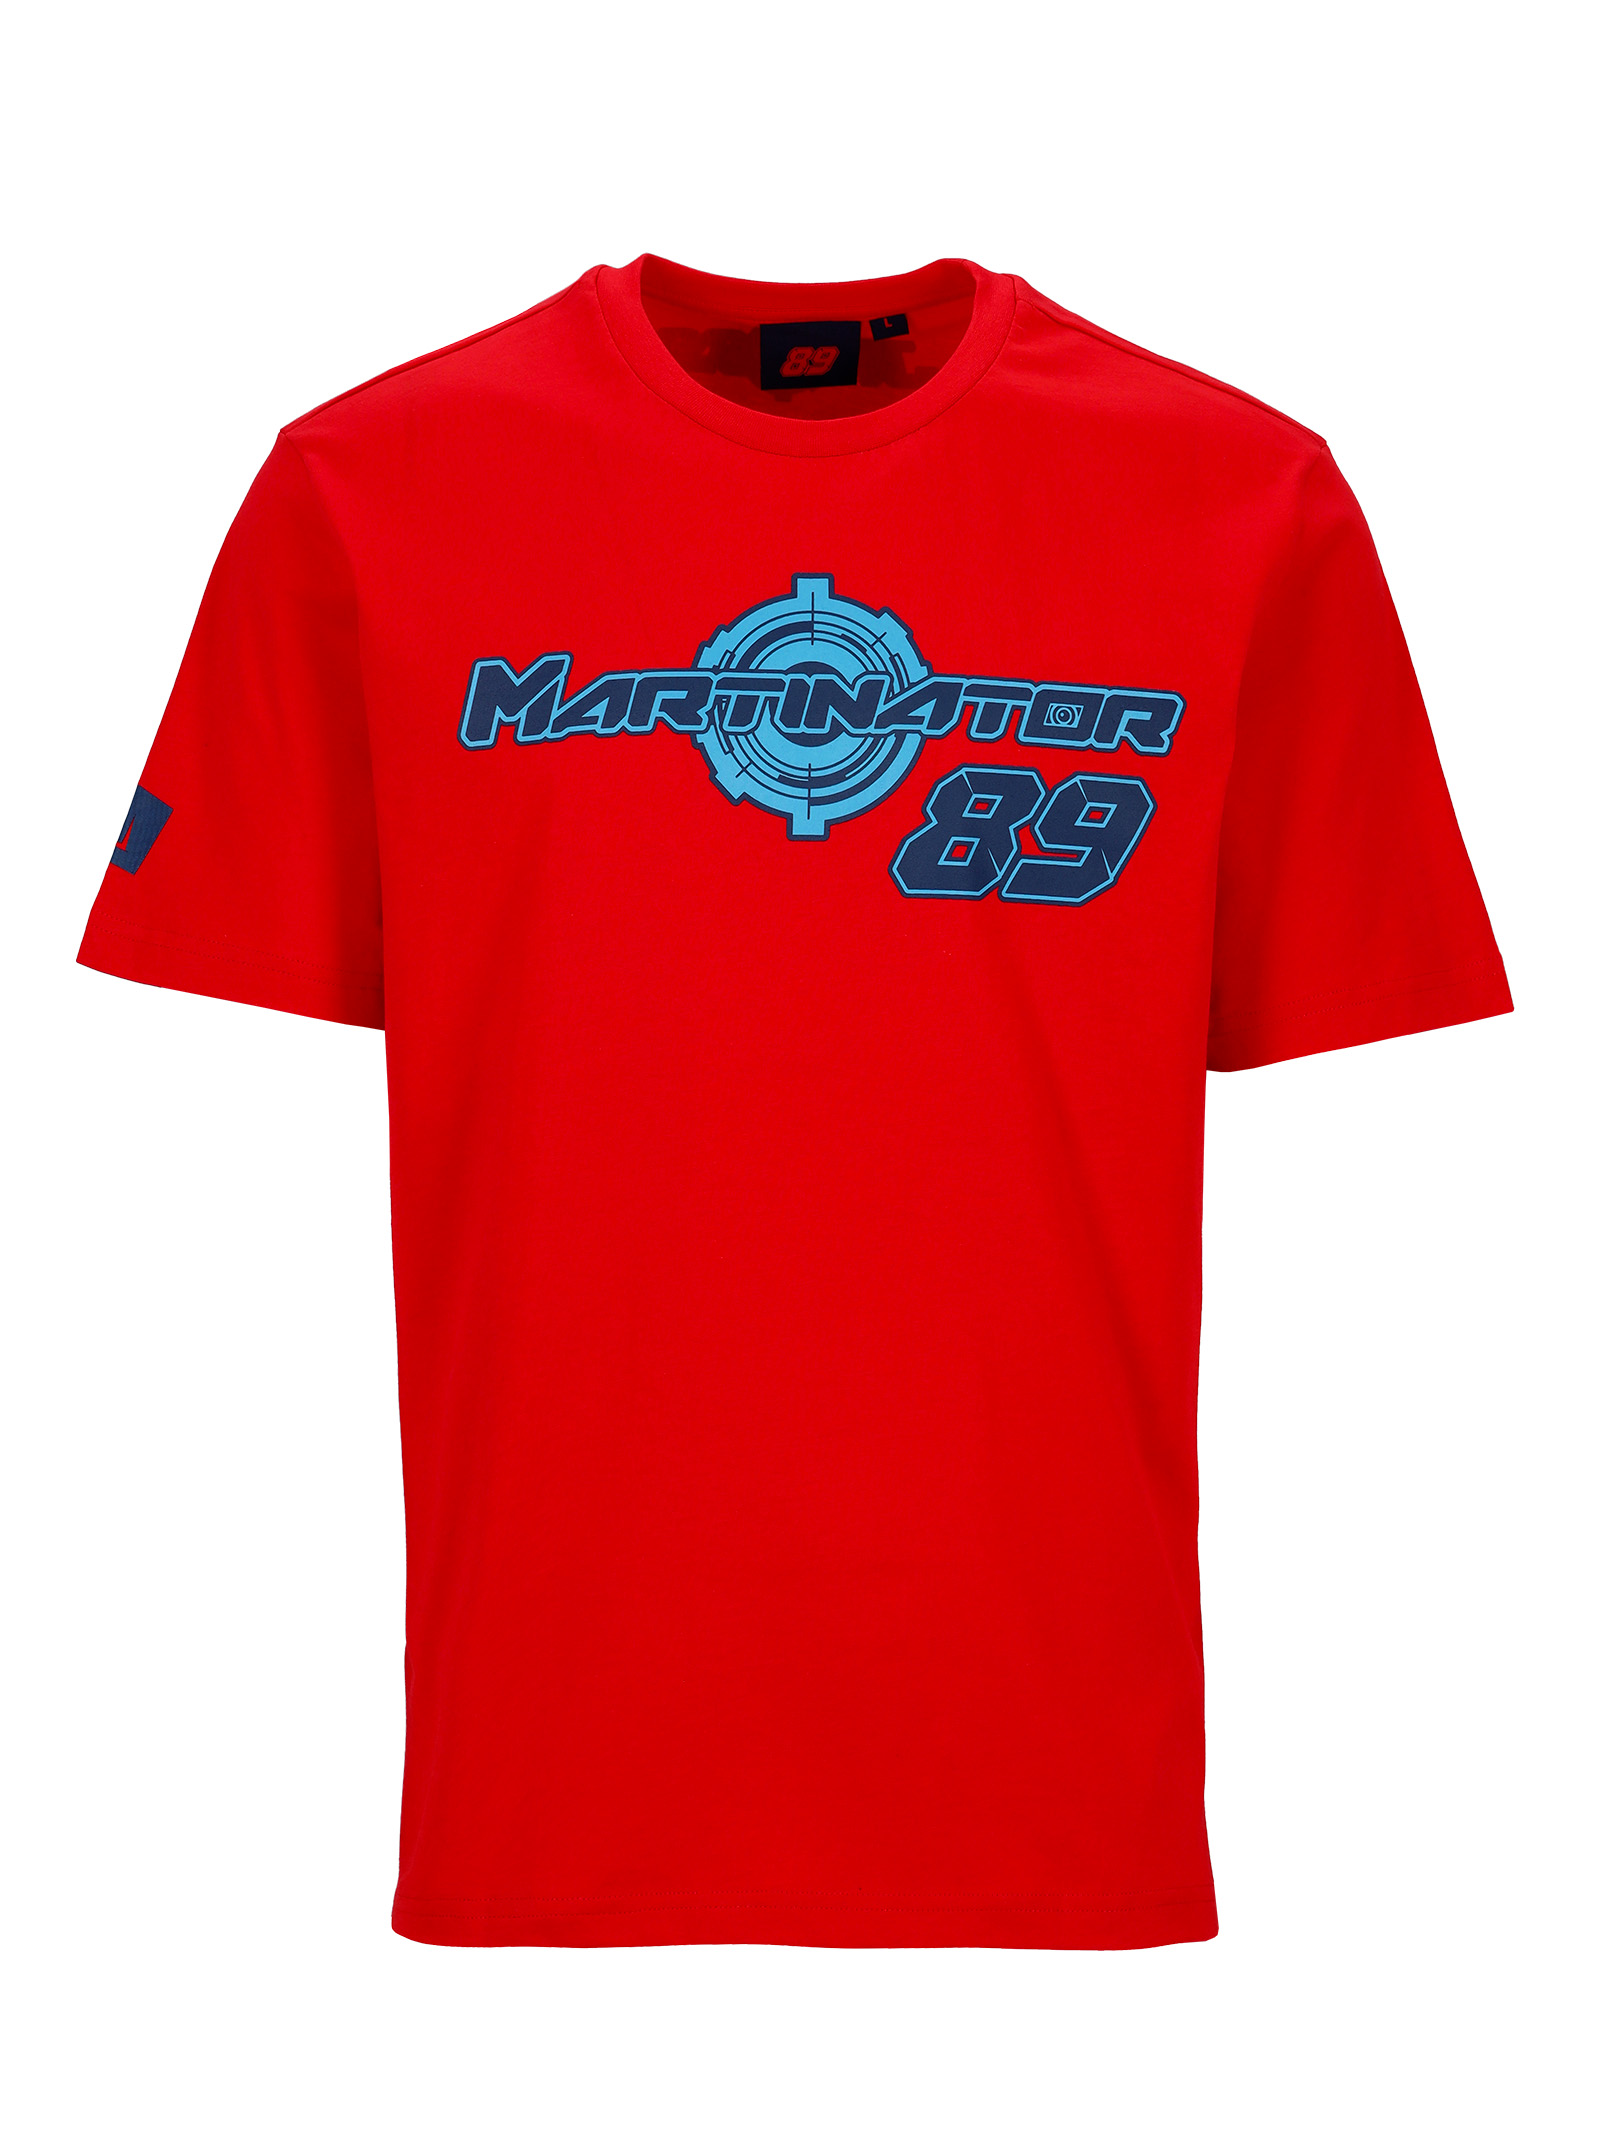 T-shirt Jorge Martin 89 Martinator rouge vue devant